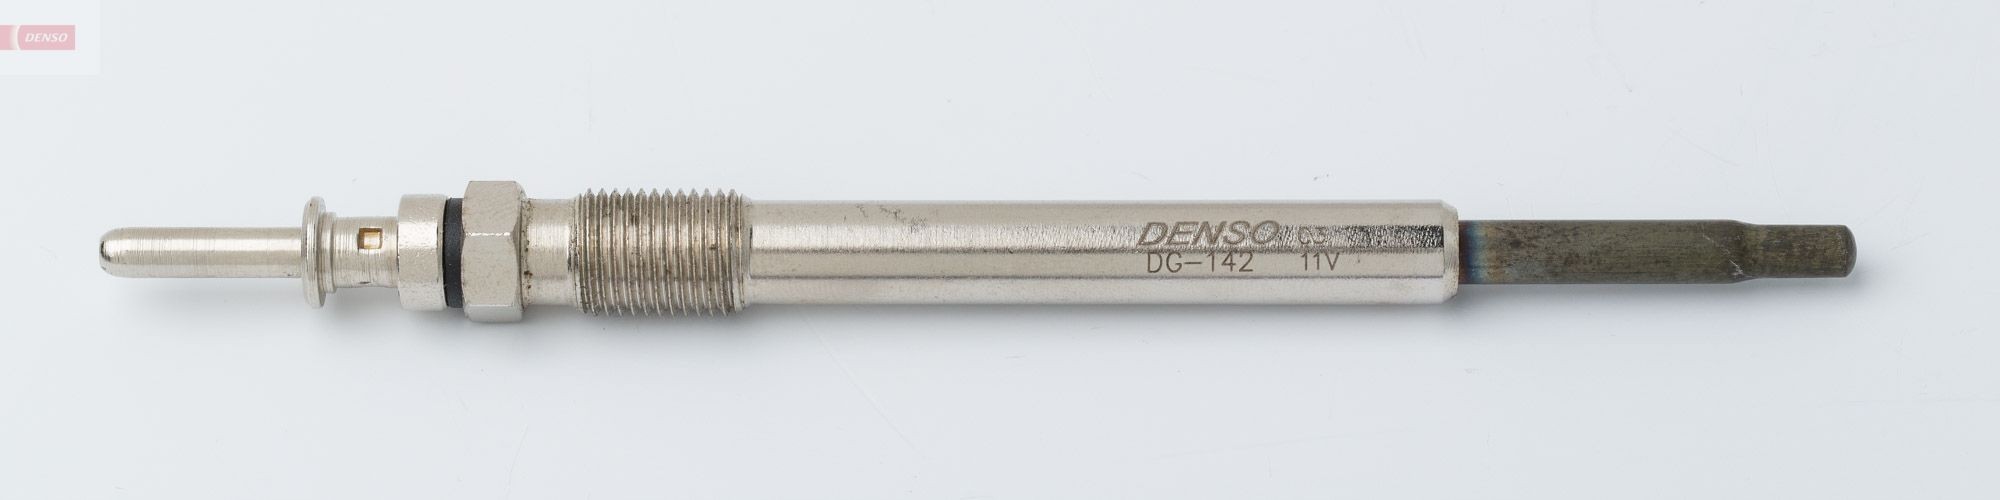 DENSO DG-142 Glow plug 1214 056